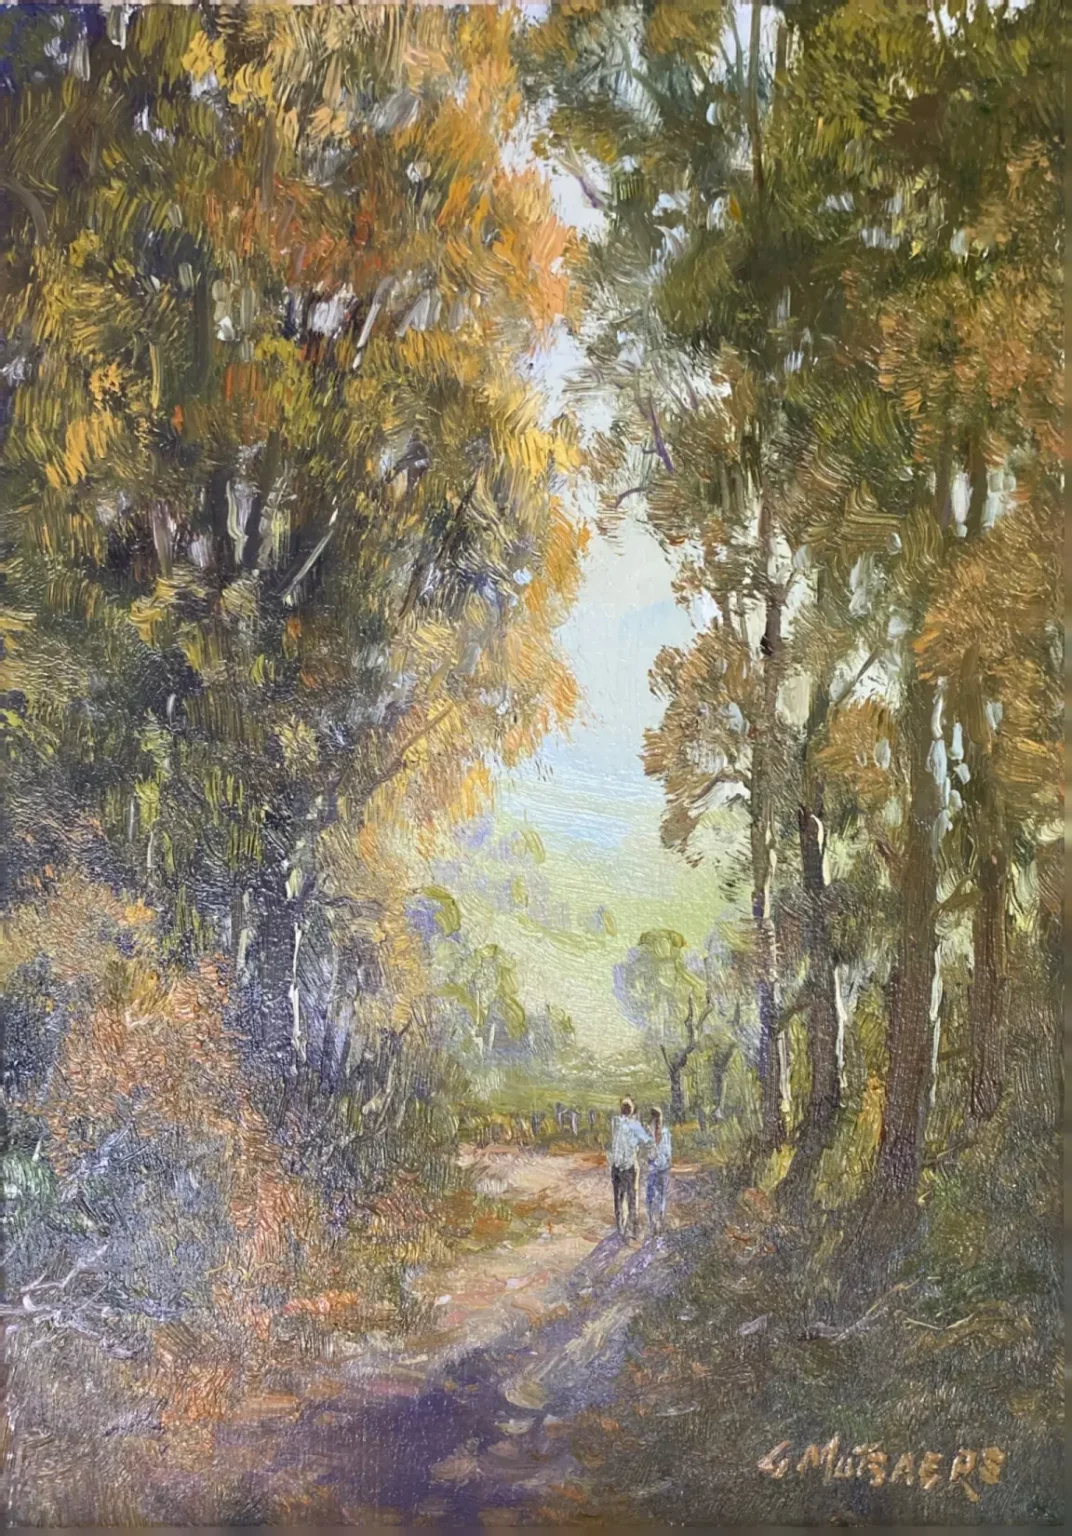 Gerard Mutsaers' "Morning Walk" Oil on Canvas Board artwork for sale